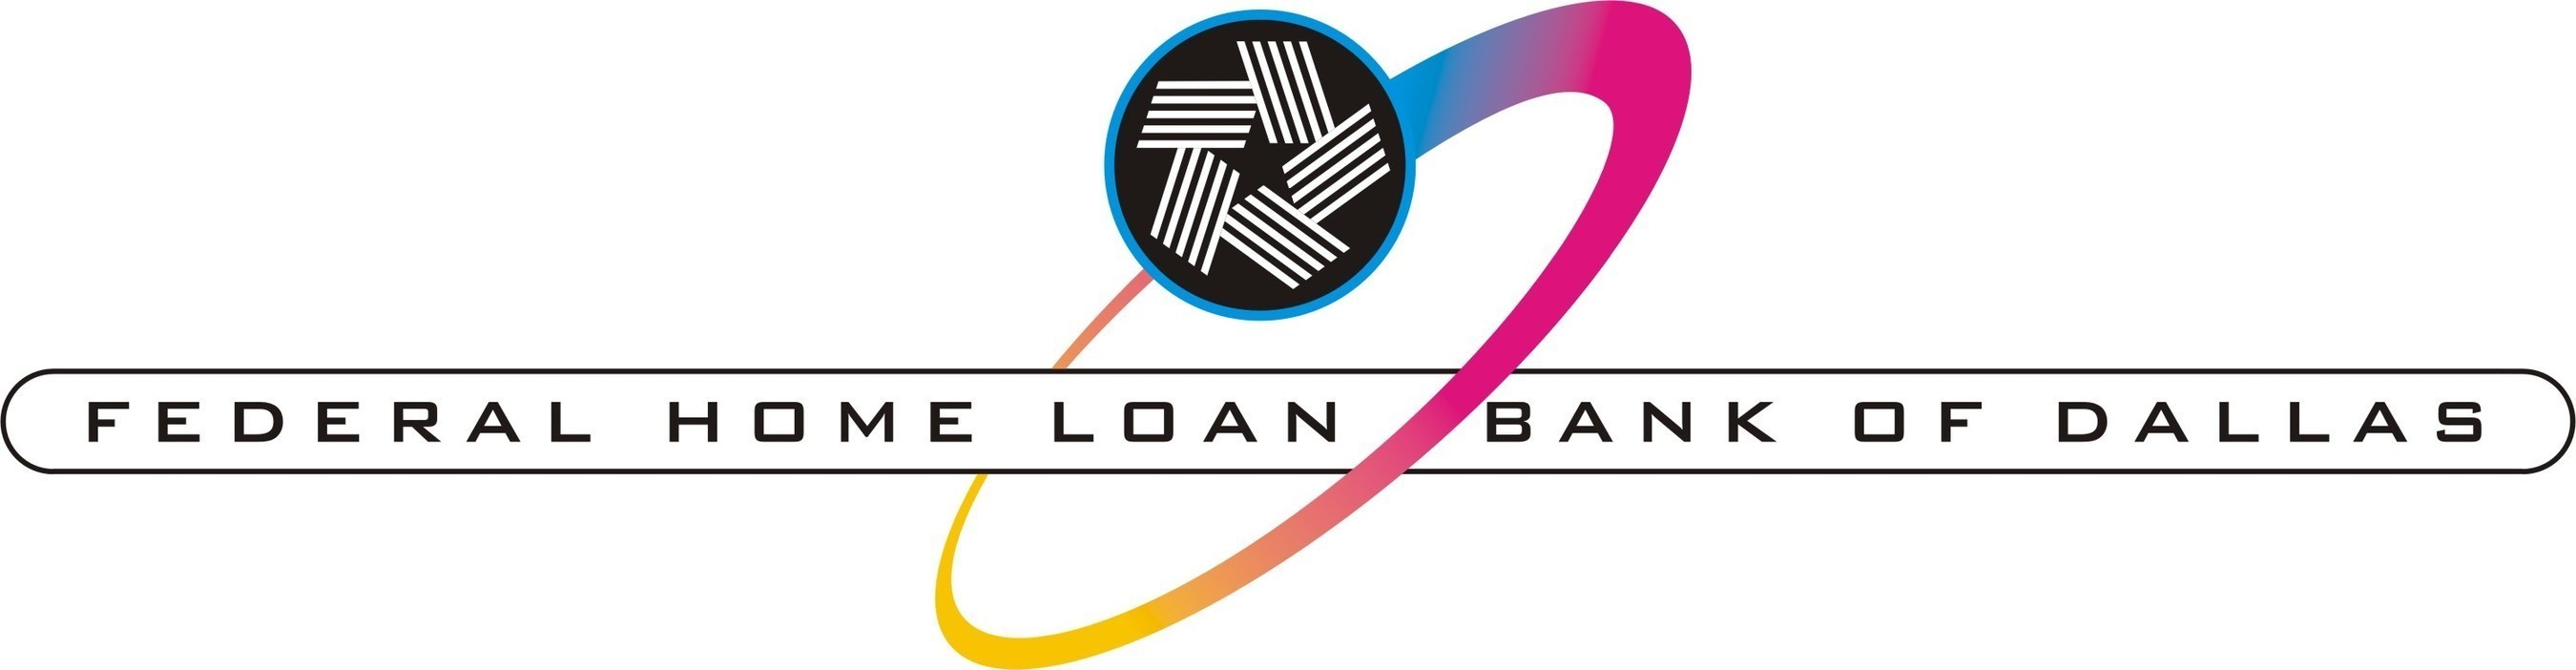 Federal Home Loan Bank of Dallas Logo (PRNewsFoto/Federal Home Loan Bank of Dallas)